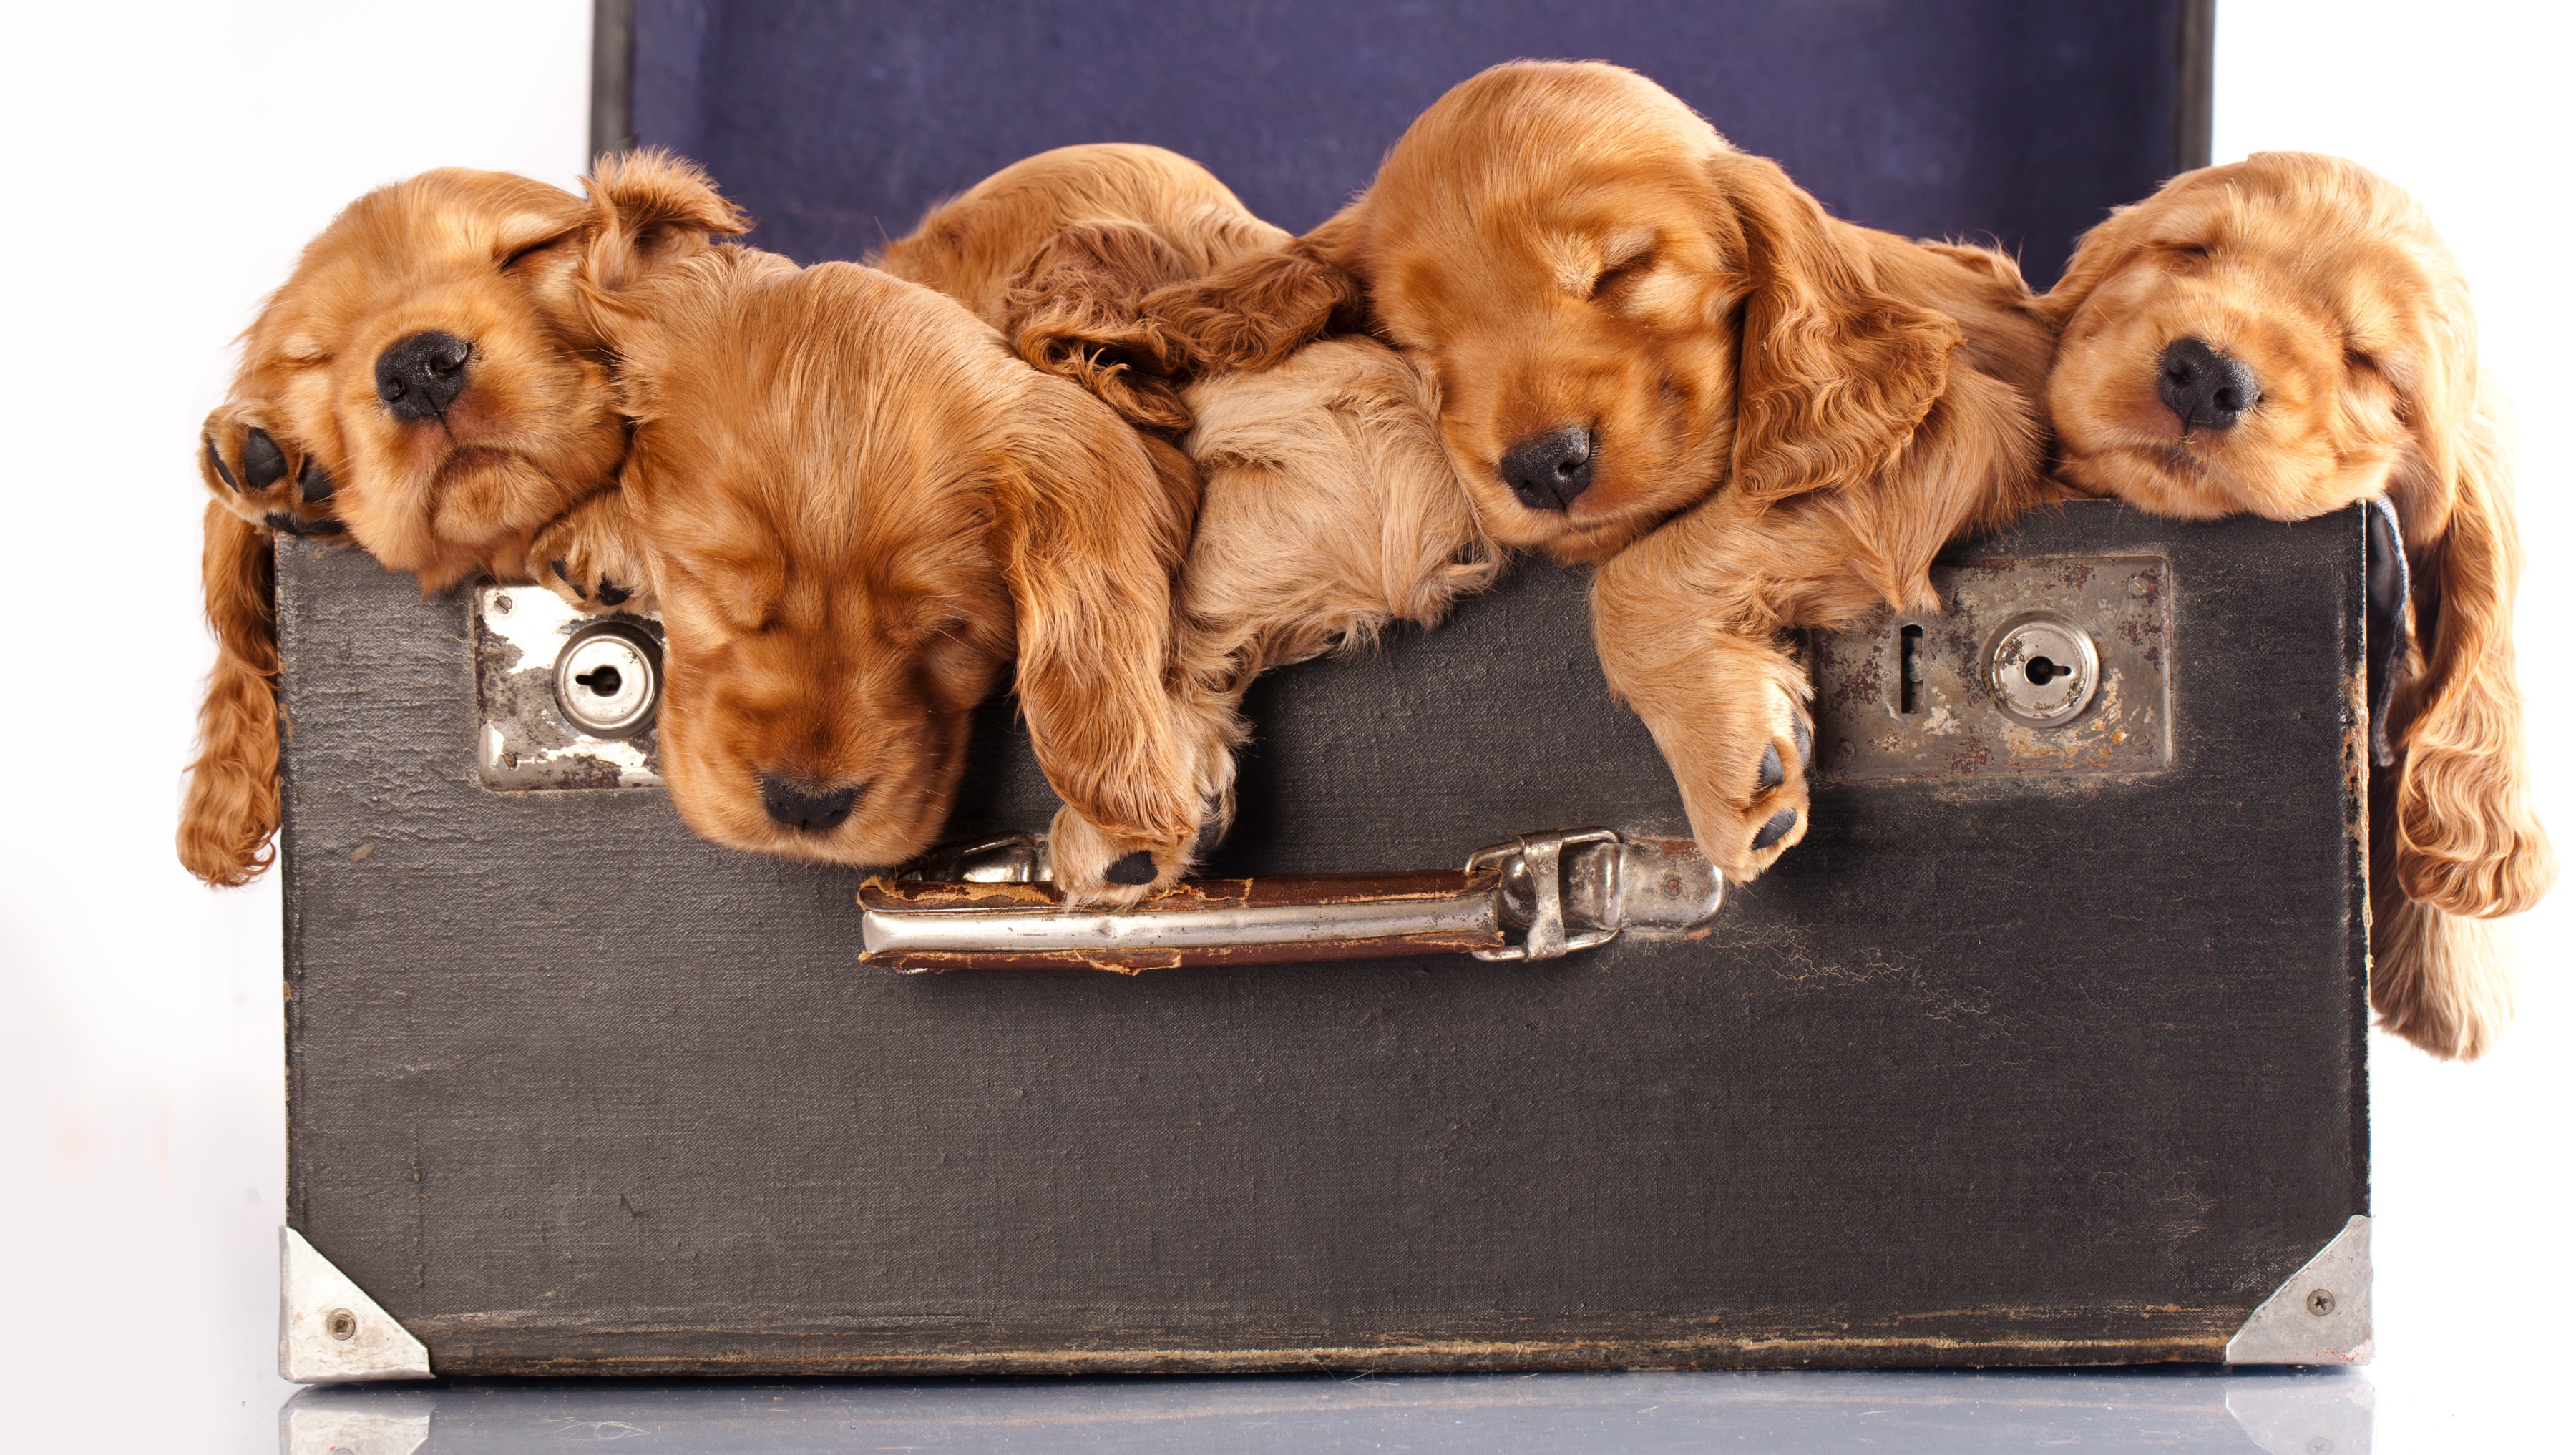 Baby Animal Dog Pet Puppy Sleeping Spaniel Suitcase 3600x2034